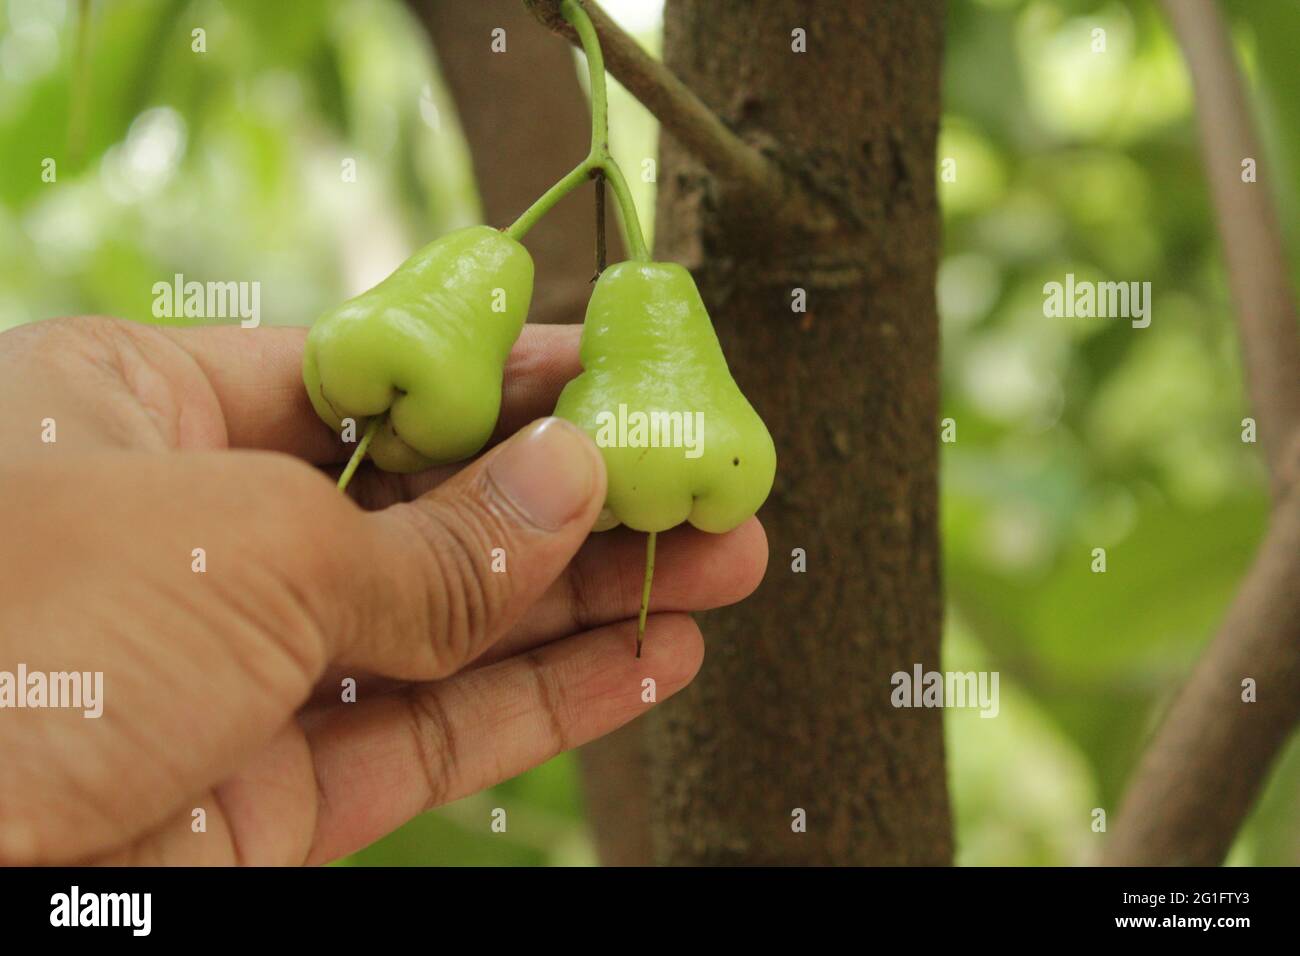 A hand touching java apple or syzygium samarangense on tree branch Stock Photo